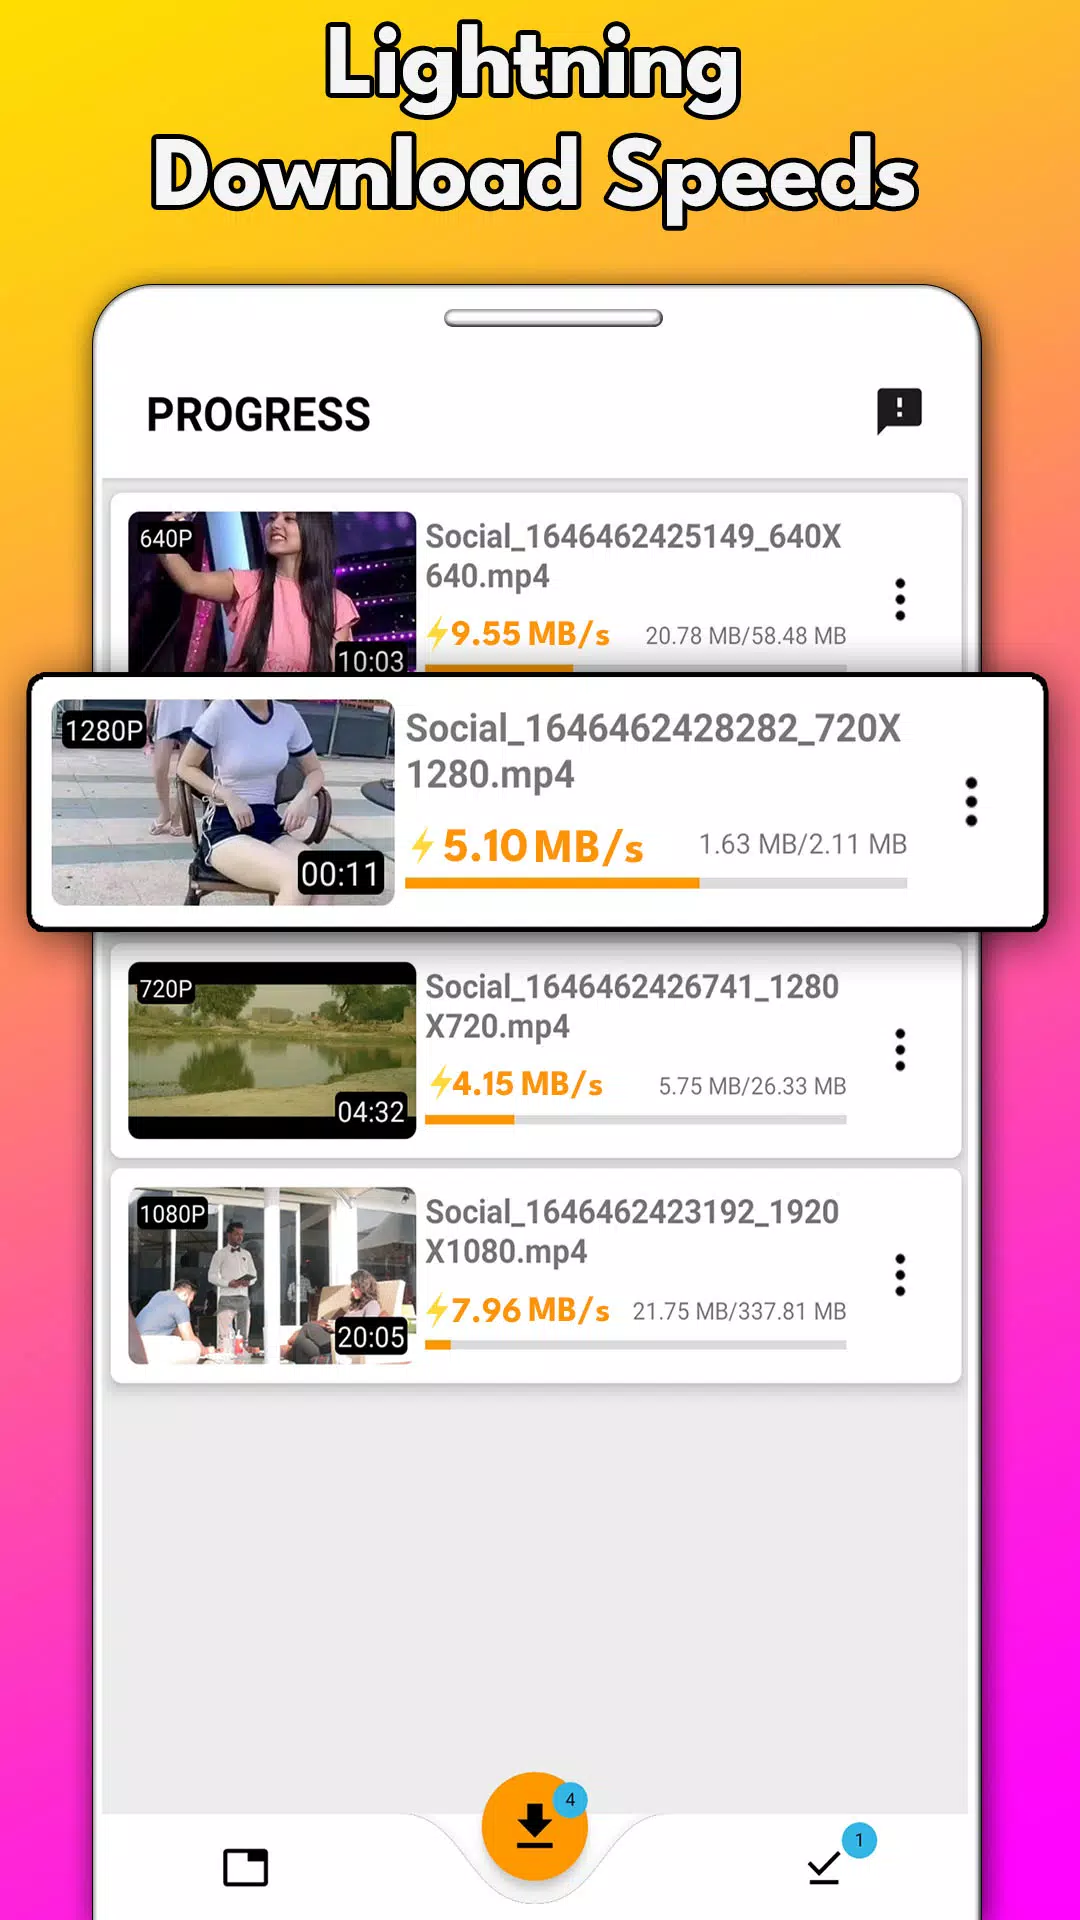 Pern Hub Video - Download Hub, Video Downloader APK for Android Download